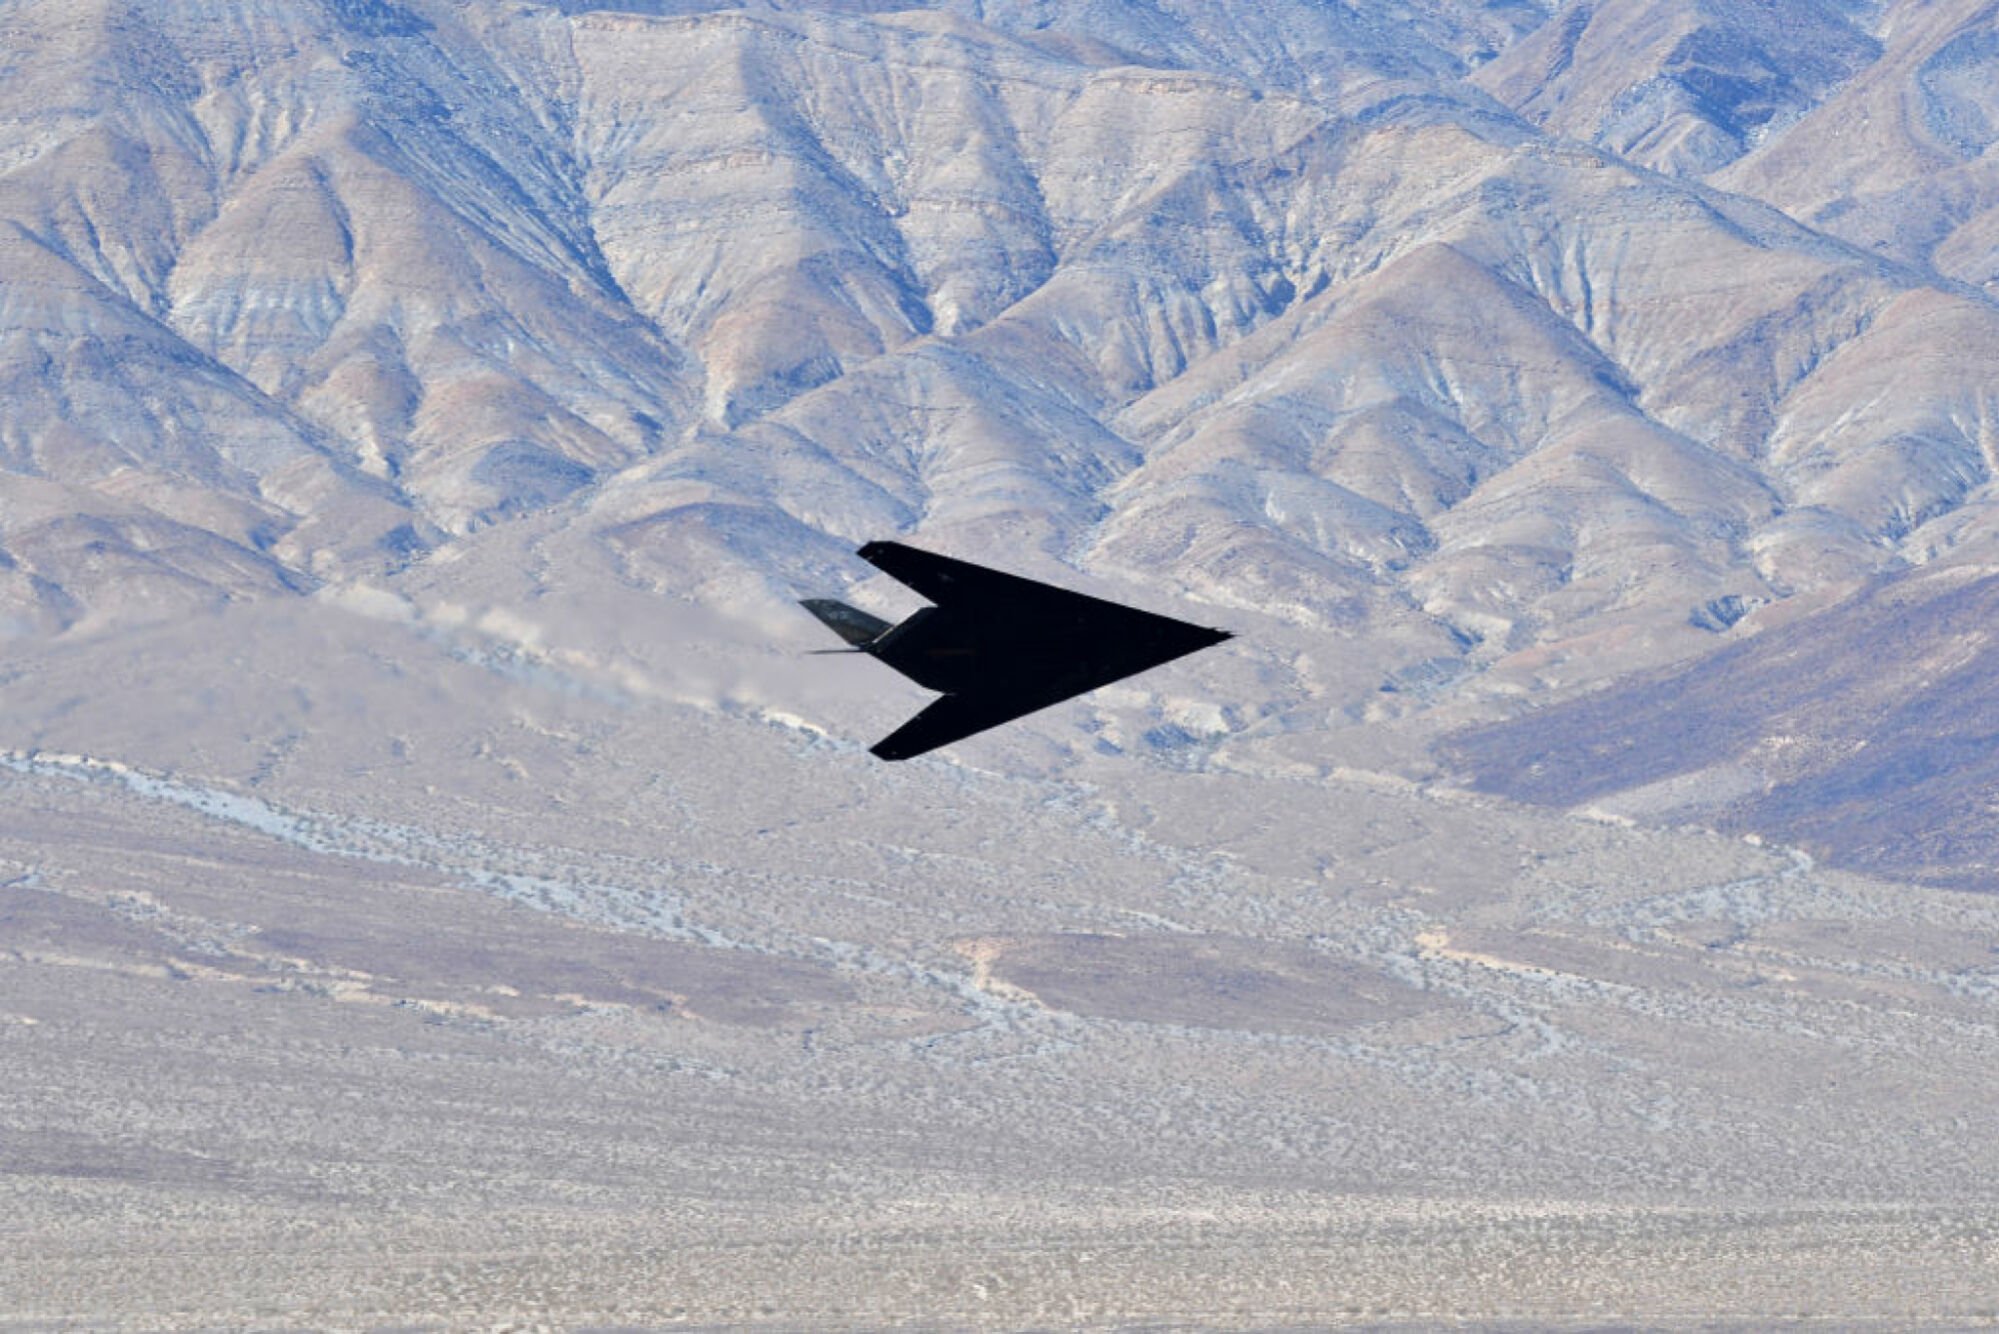 Chasseur furtif F-117 Nighthawk volant dans la Vallée de la Mort, en Californie